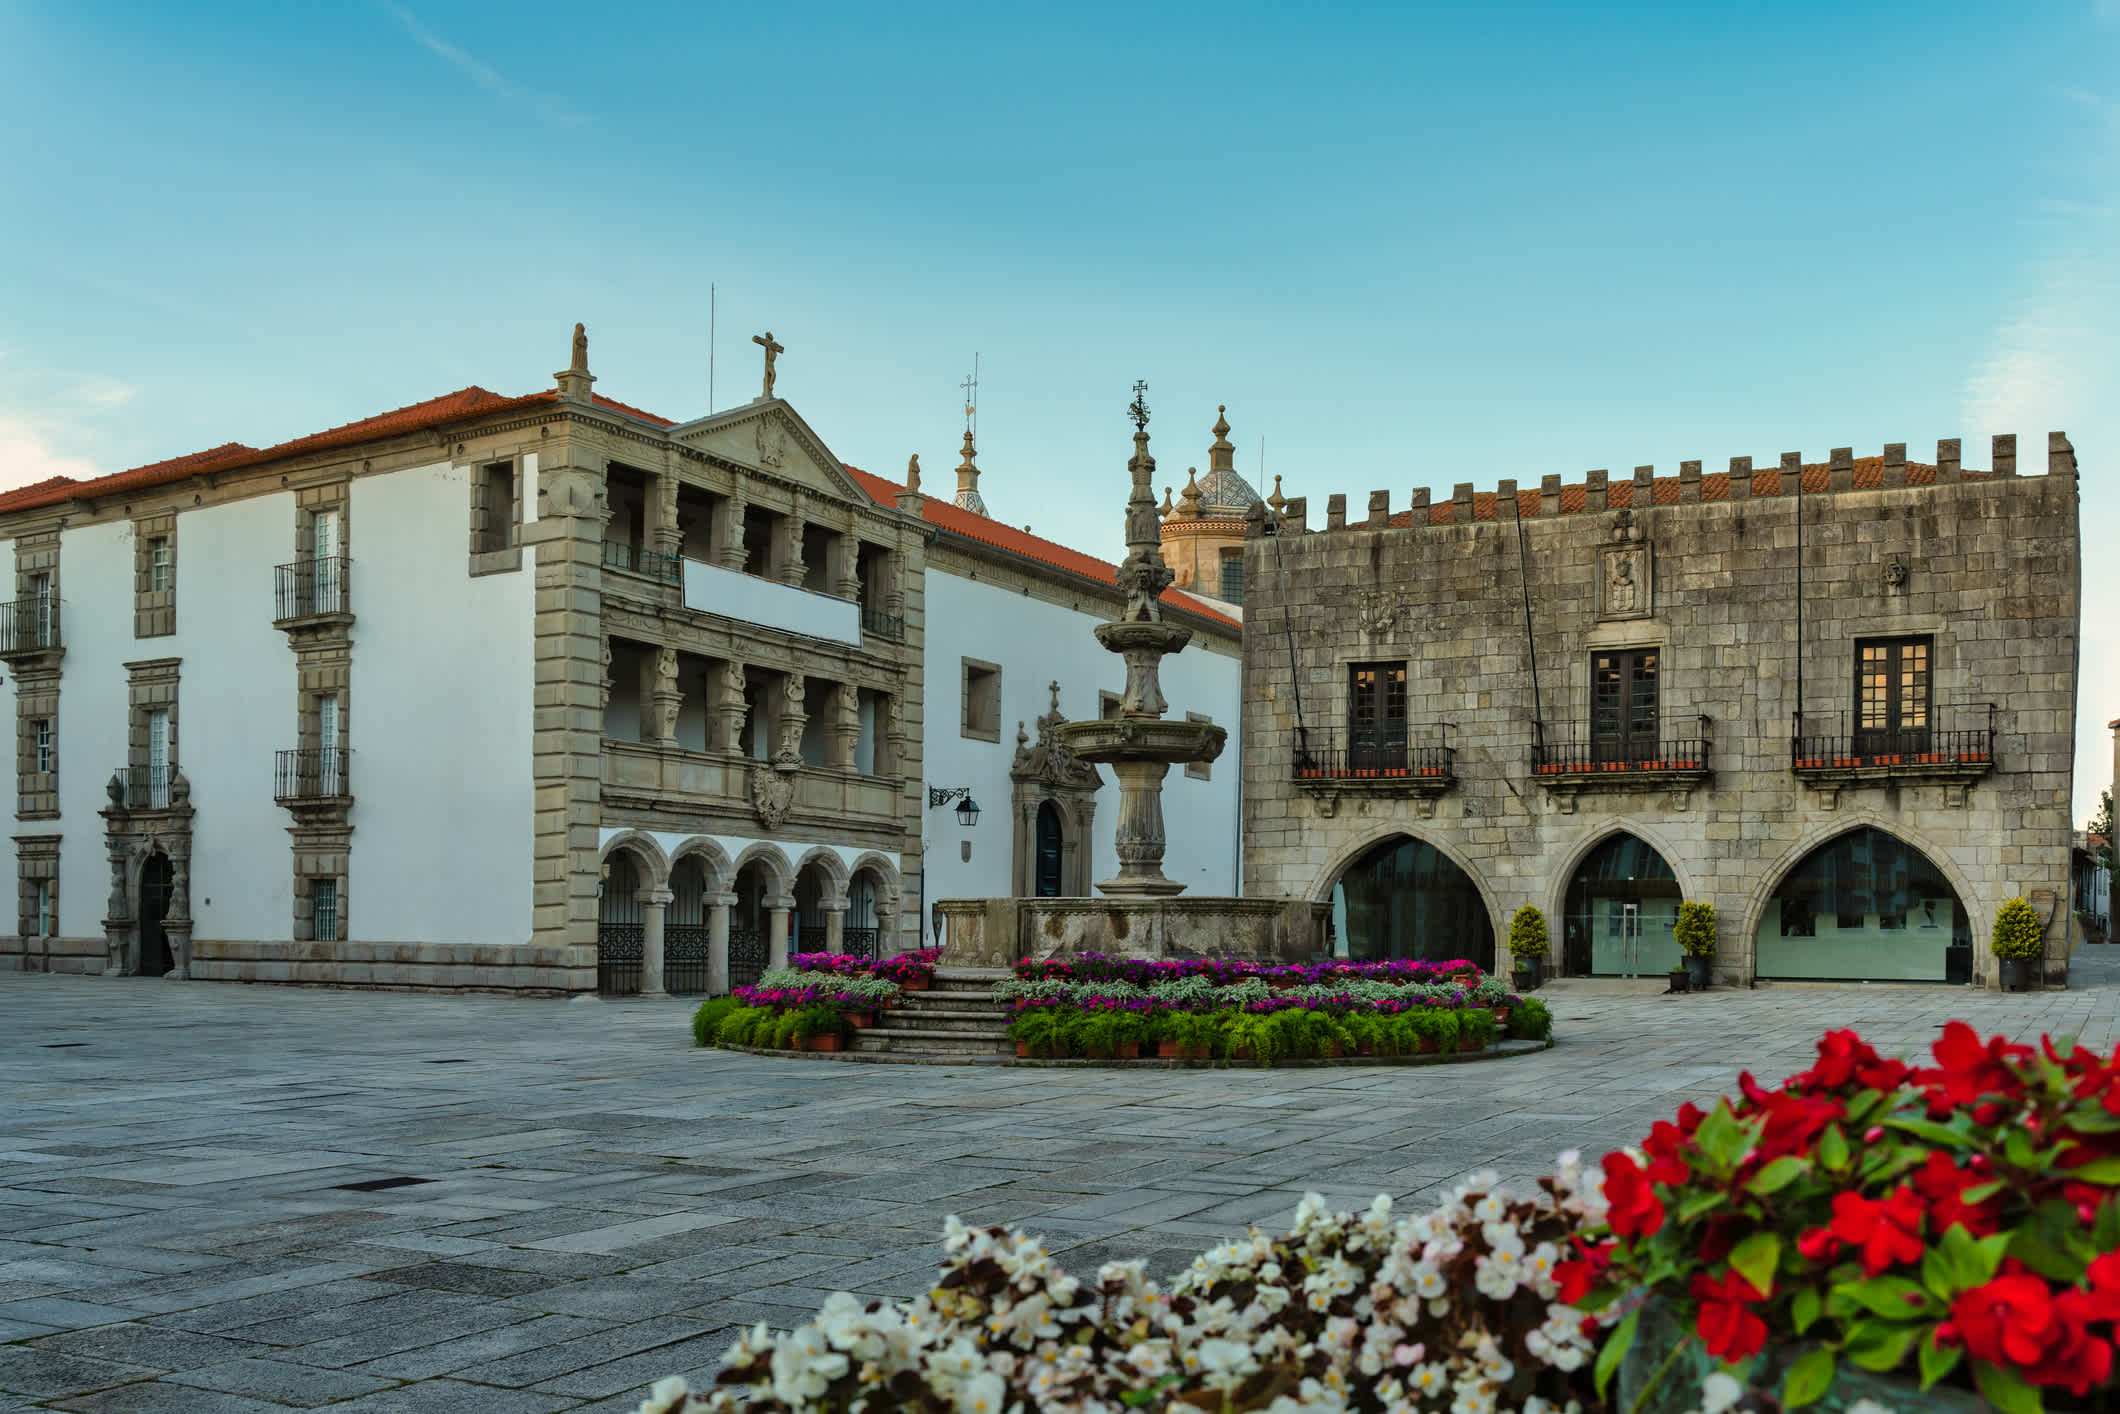 Der Blick auf dem República Platz in Viana do Castelo, Portugal

